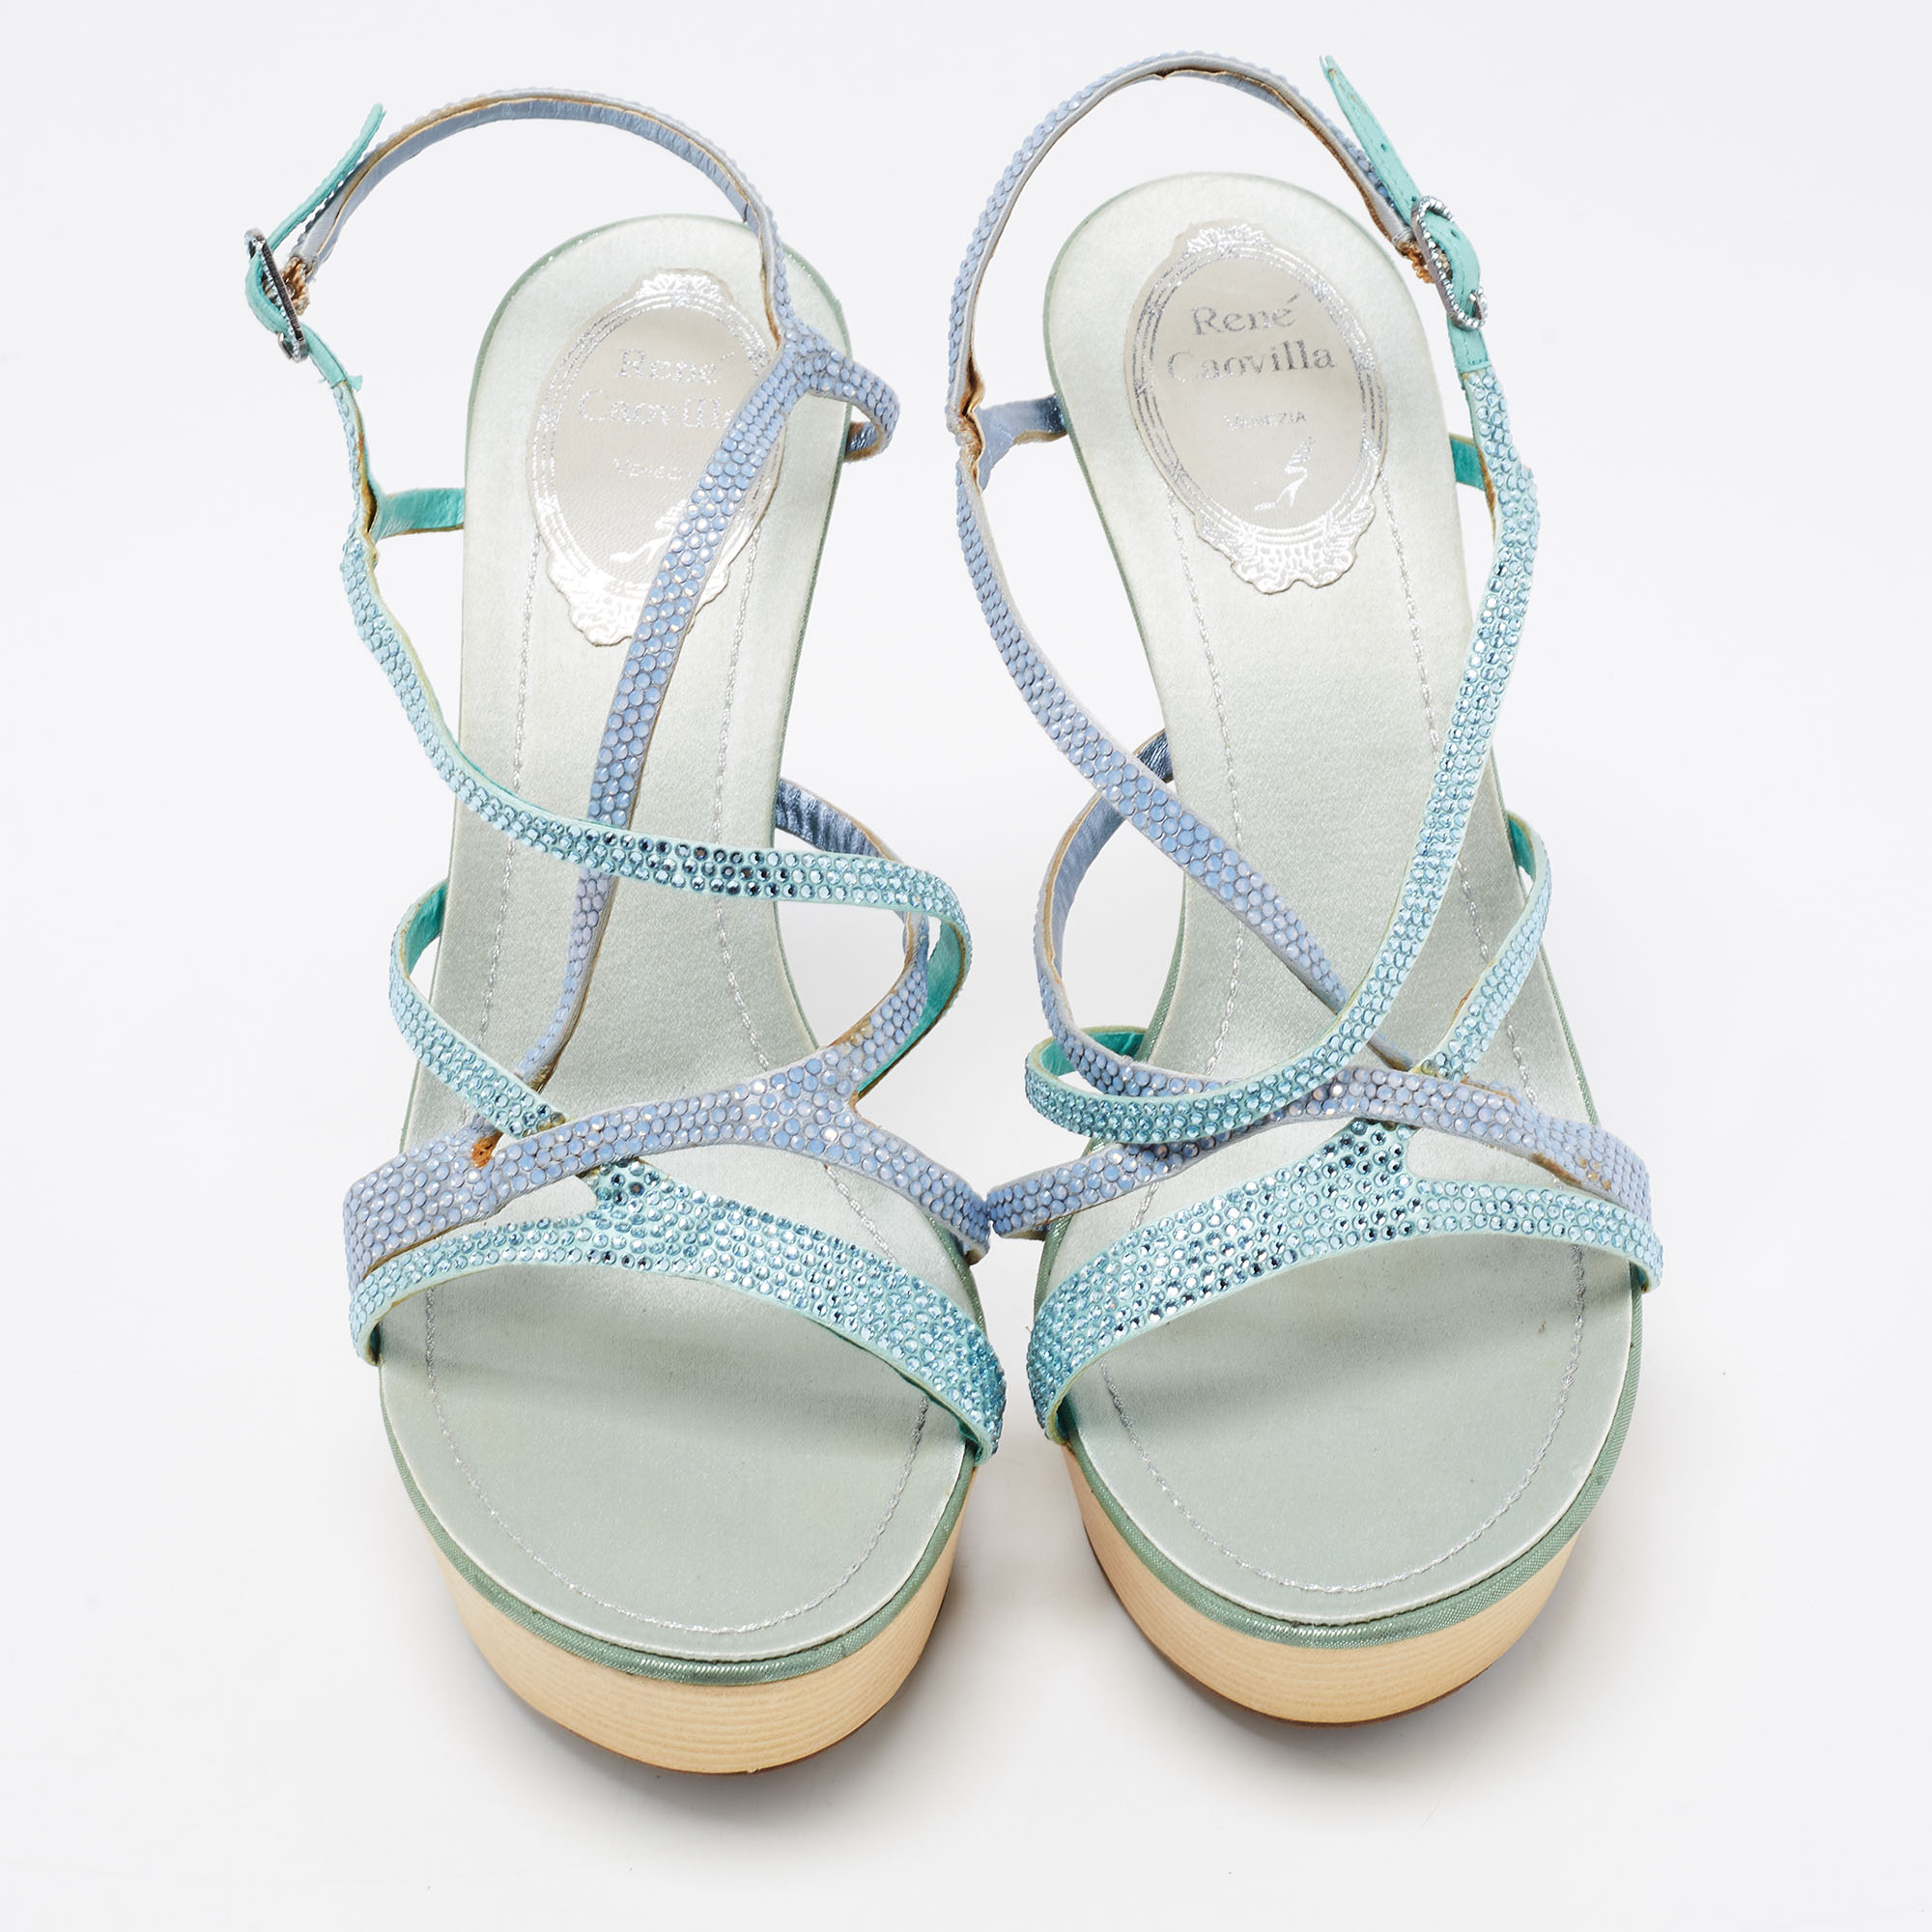 René Caovilla Two Tone Crystal Embellished Satin Ankle-Strap Platform Sandals Size 37.5